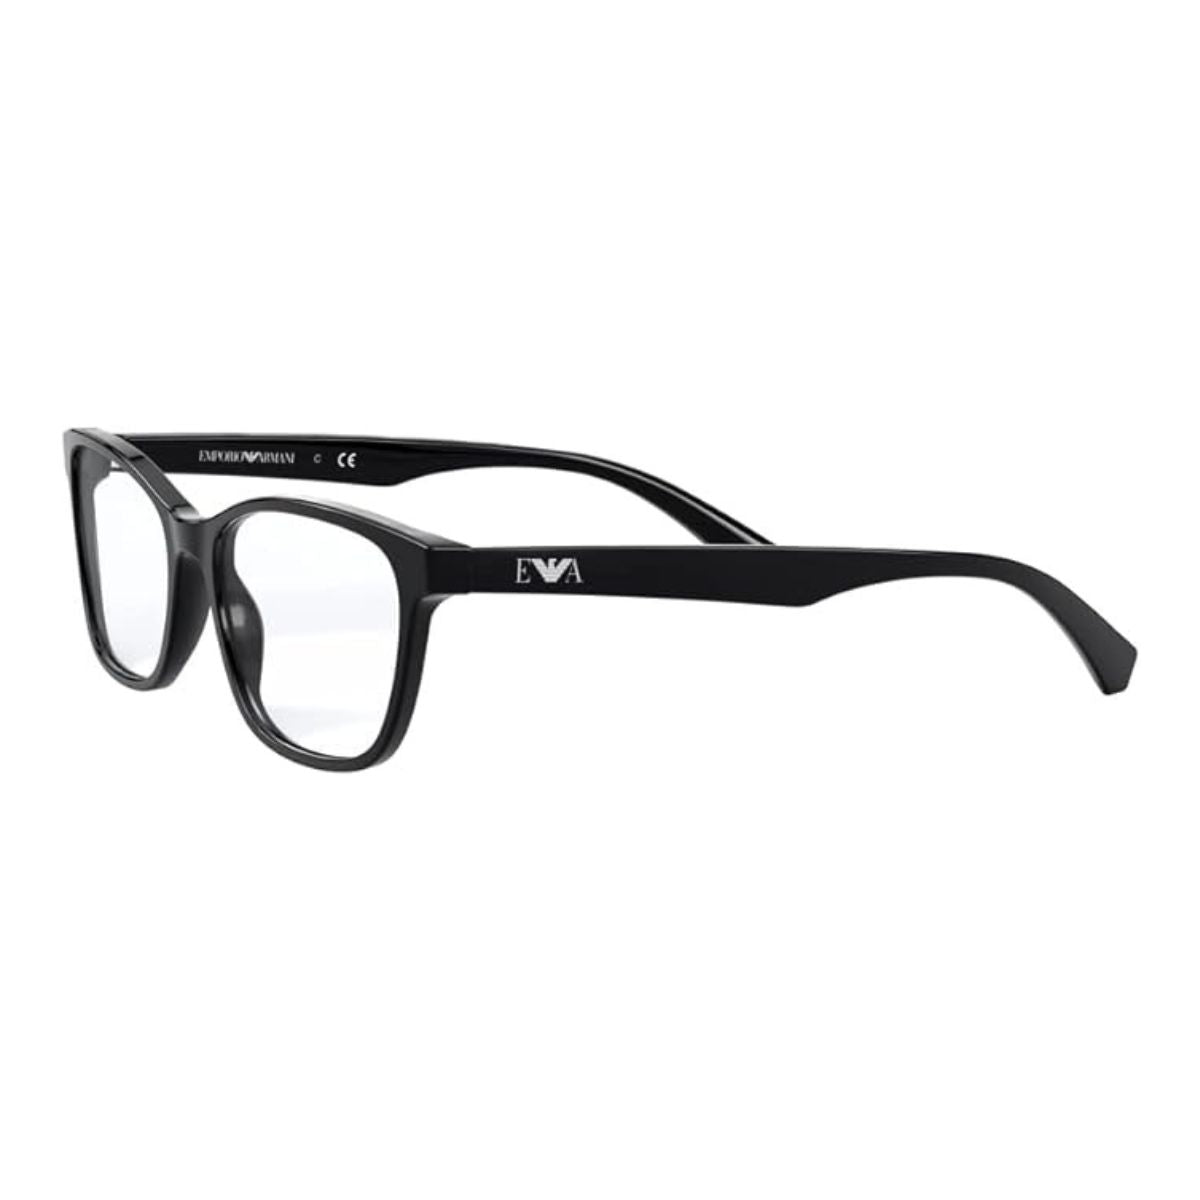 "Emporio Armani 3157 5001 eyesight glasses frame for women's at optorium"